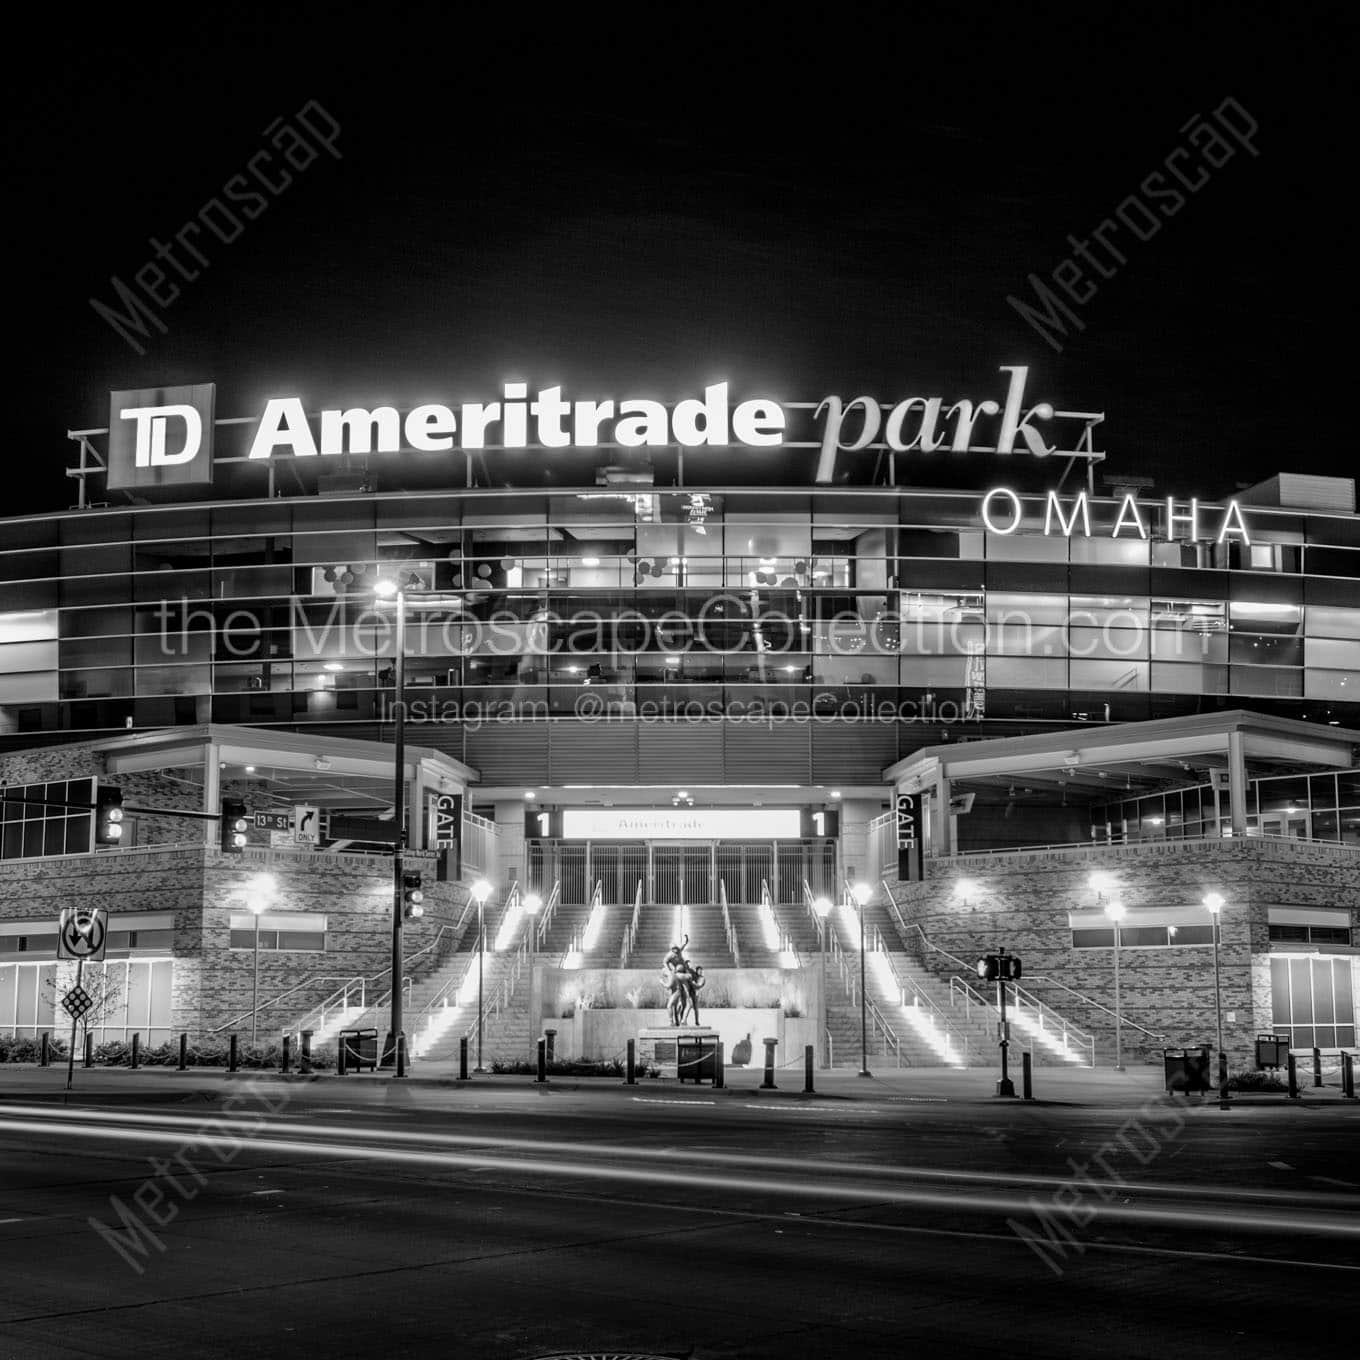 ameritrade stadium at night Black & White Office Art